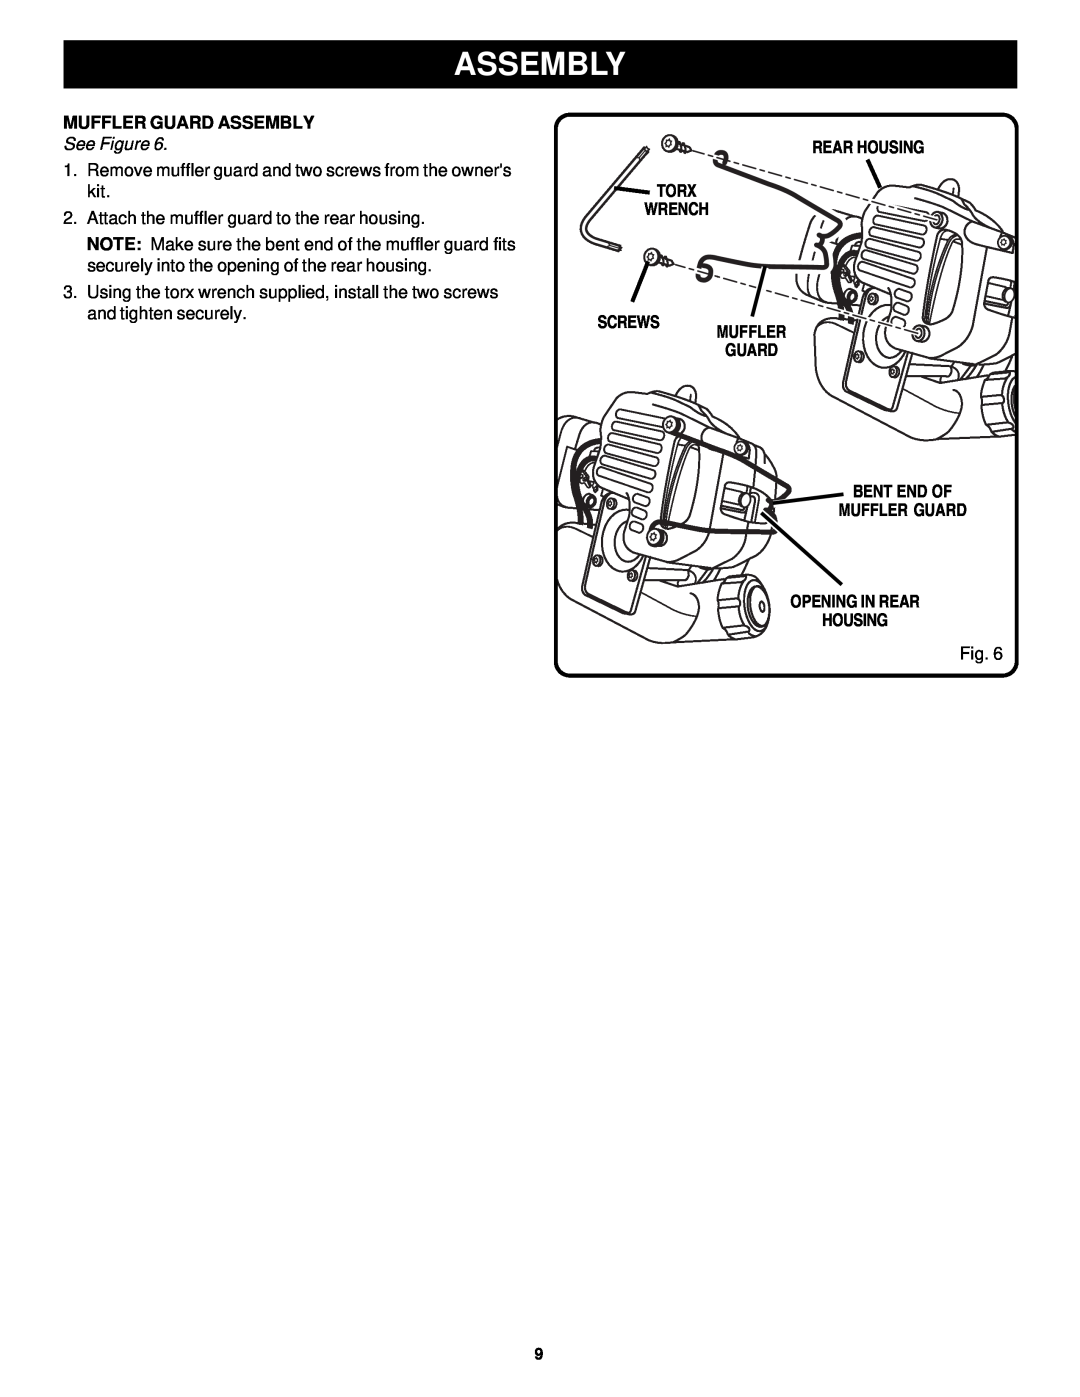 Ryobi PLT3043S manual Muffler Guard Assembly, Rear Housing Torx Wrench Screws Muffler Guard, See Figure 